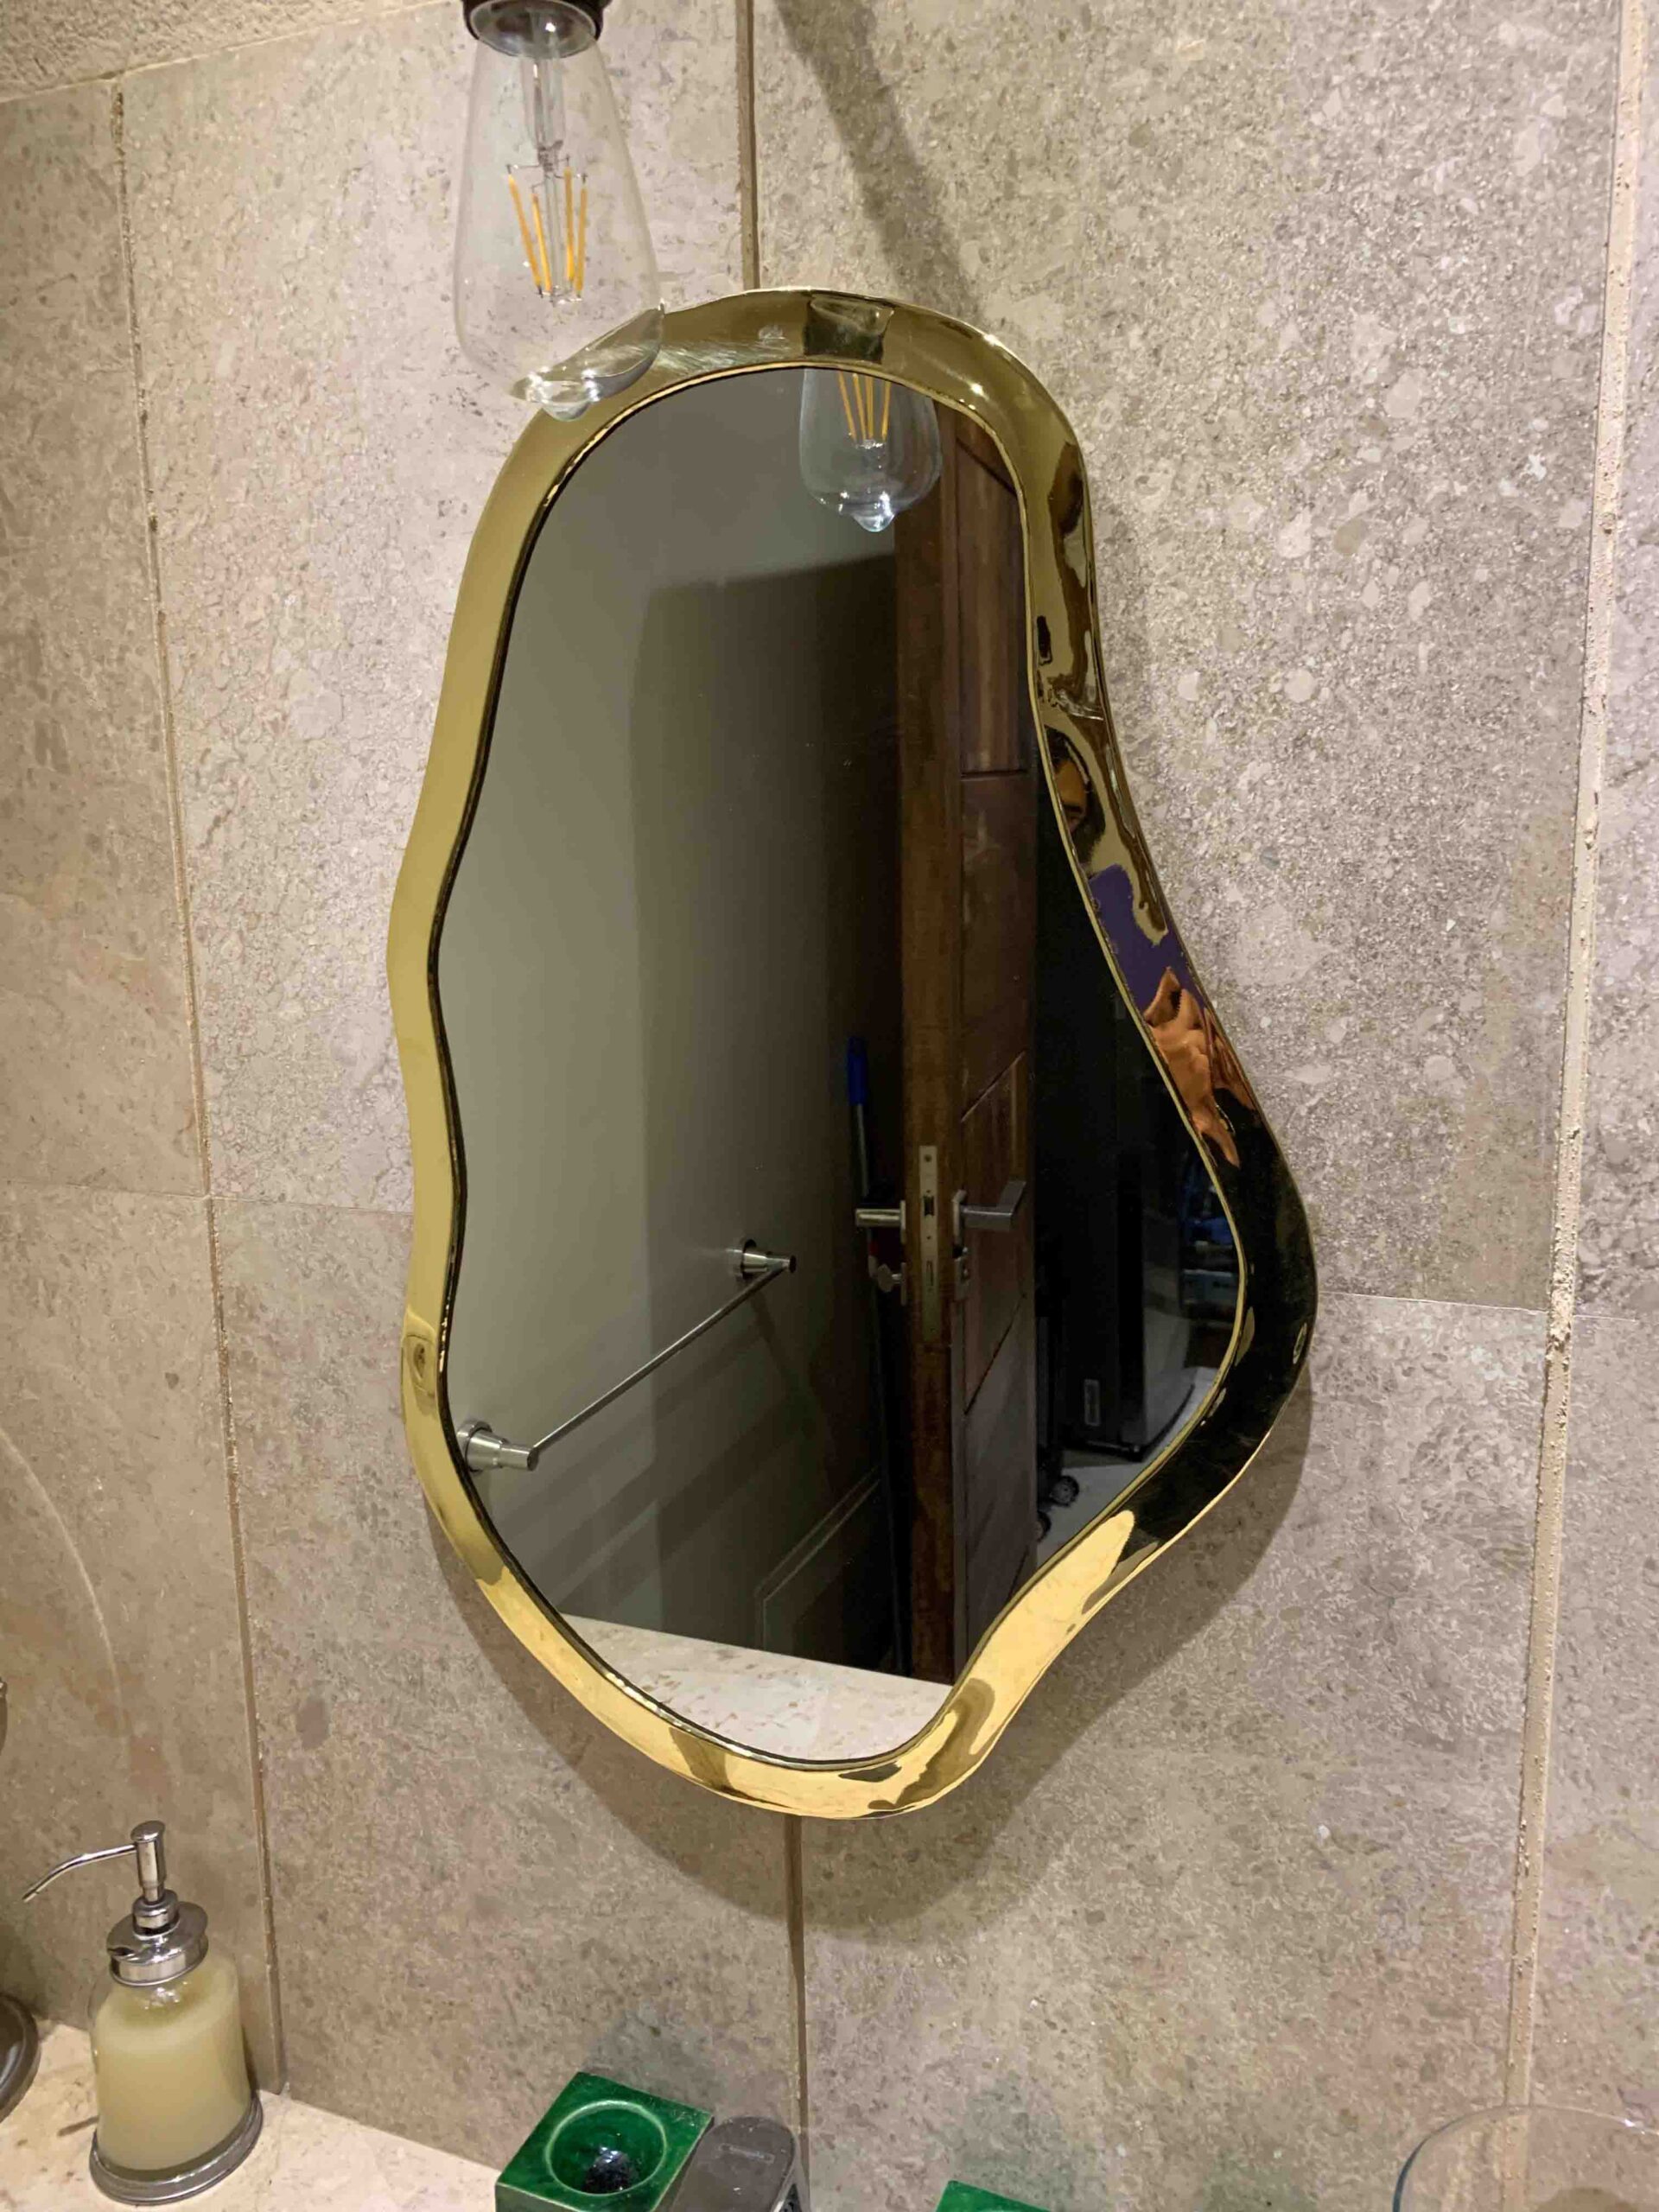 Asymmetrical Mirror Irregular Mirror for Living Room